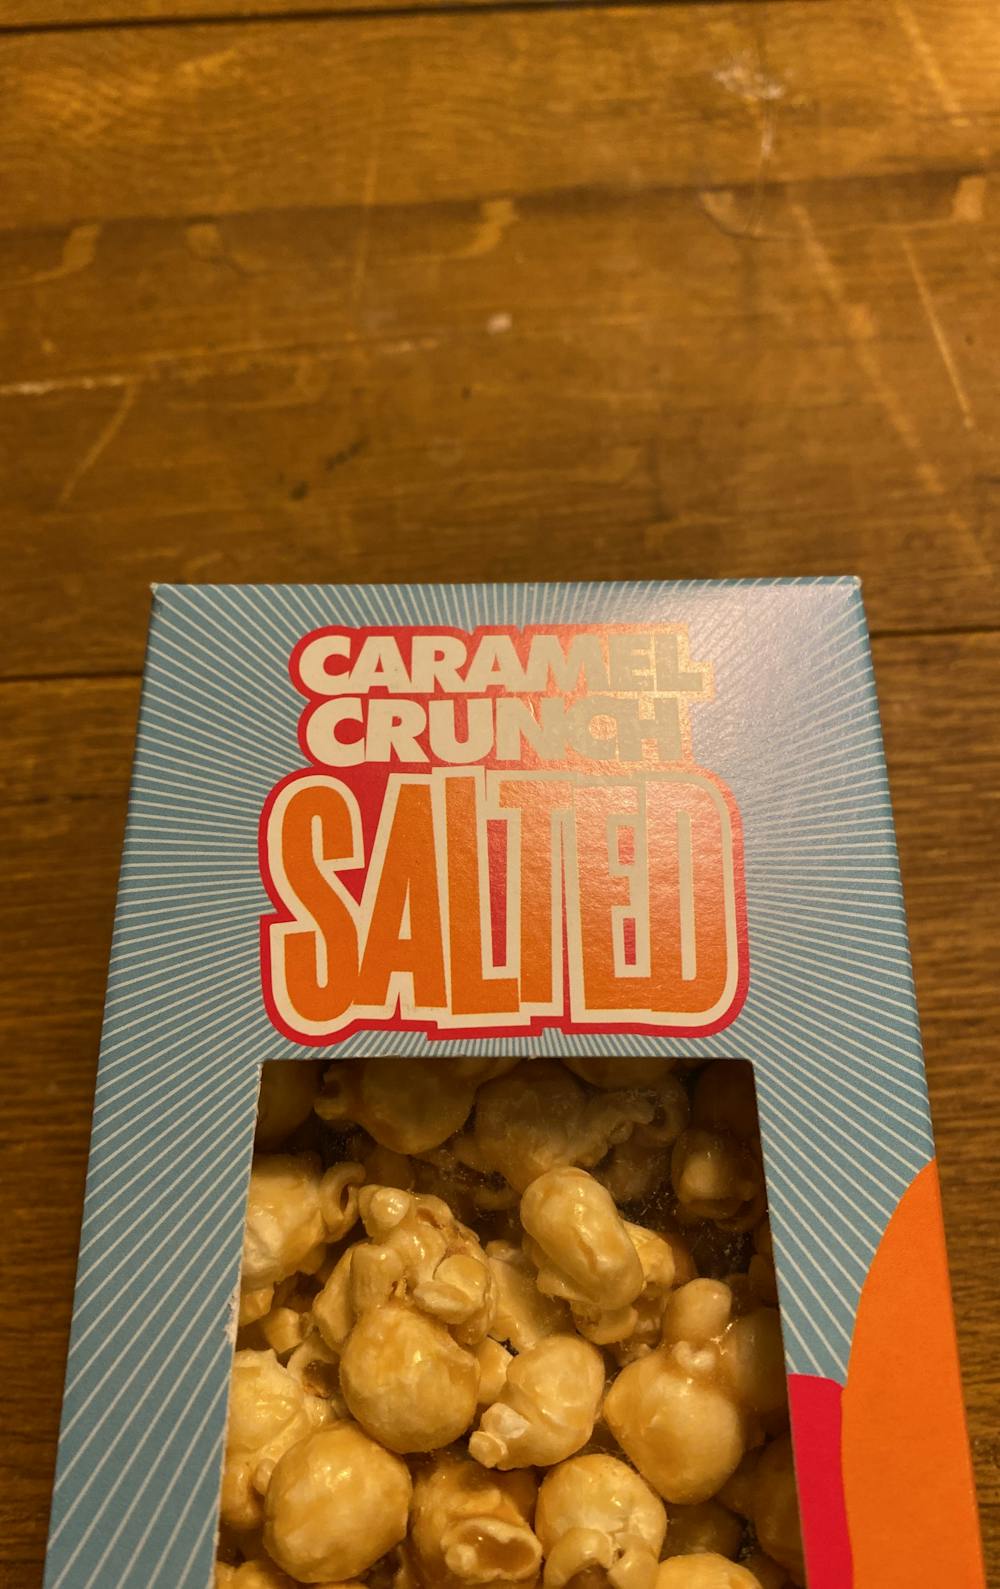 Caramel crunch salted